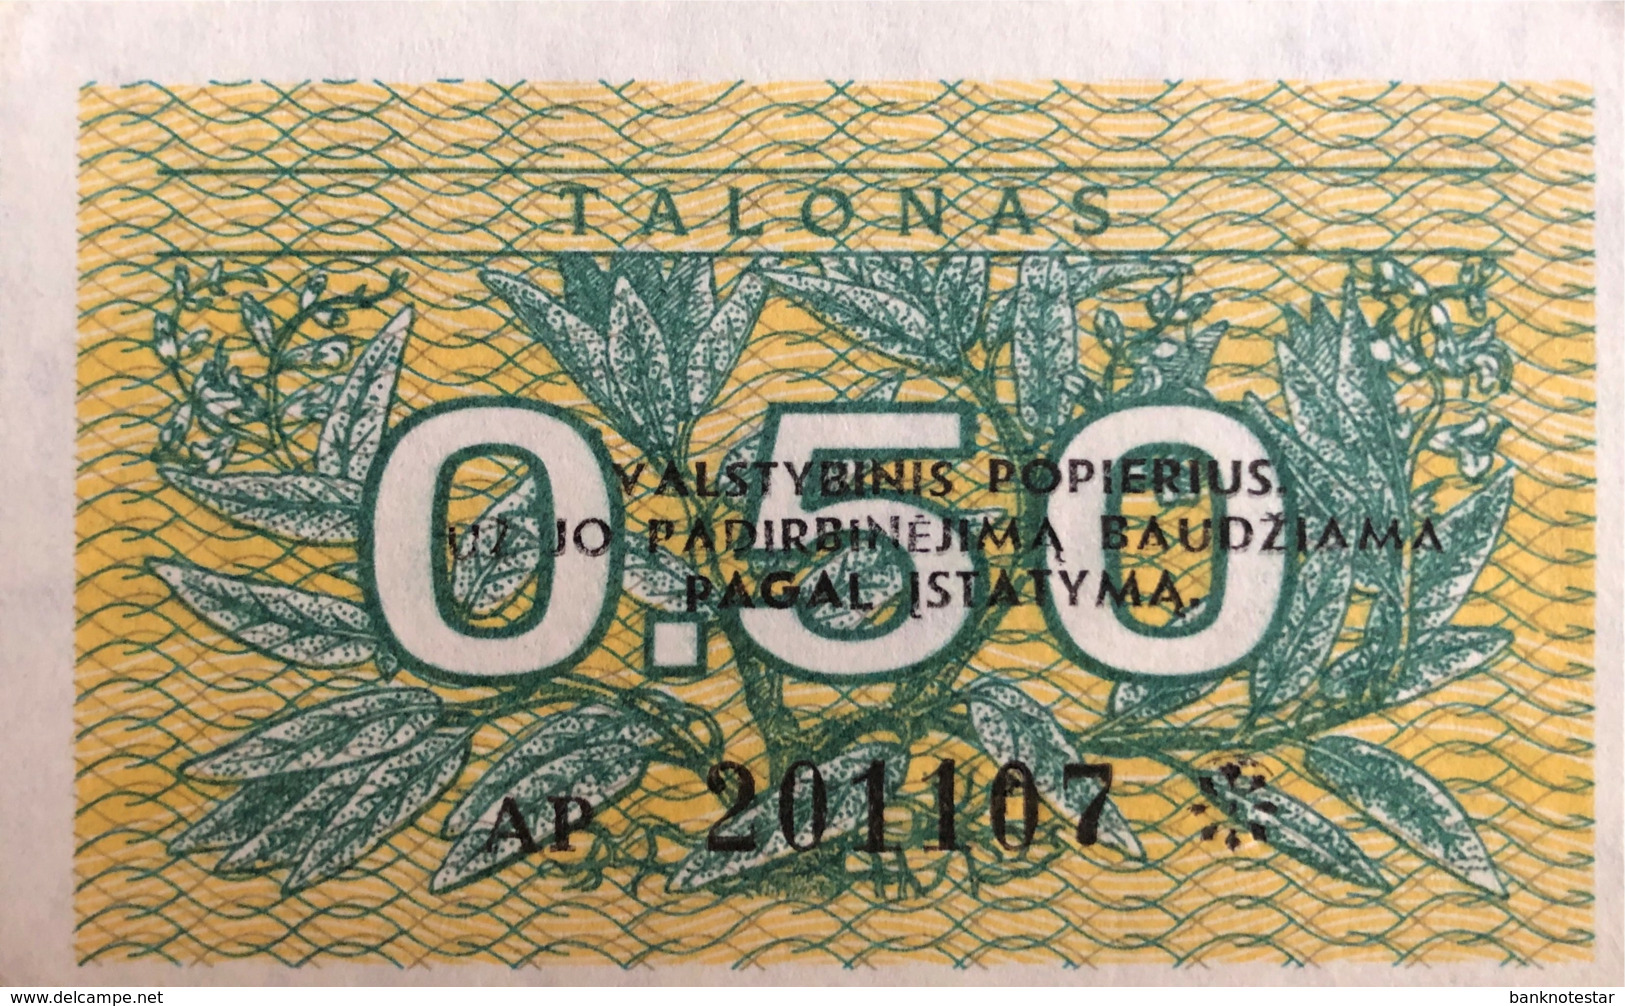 Lithuania 0.50 Talonas, P-31x1 (1991) - UNC - Error Print "Valstybinis" - Lithuania